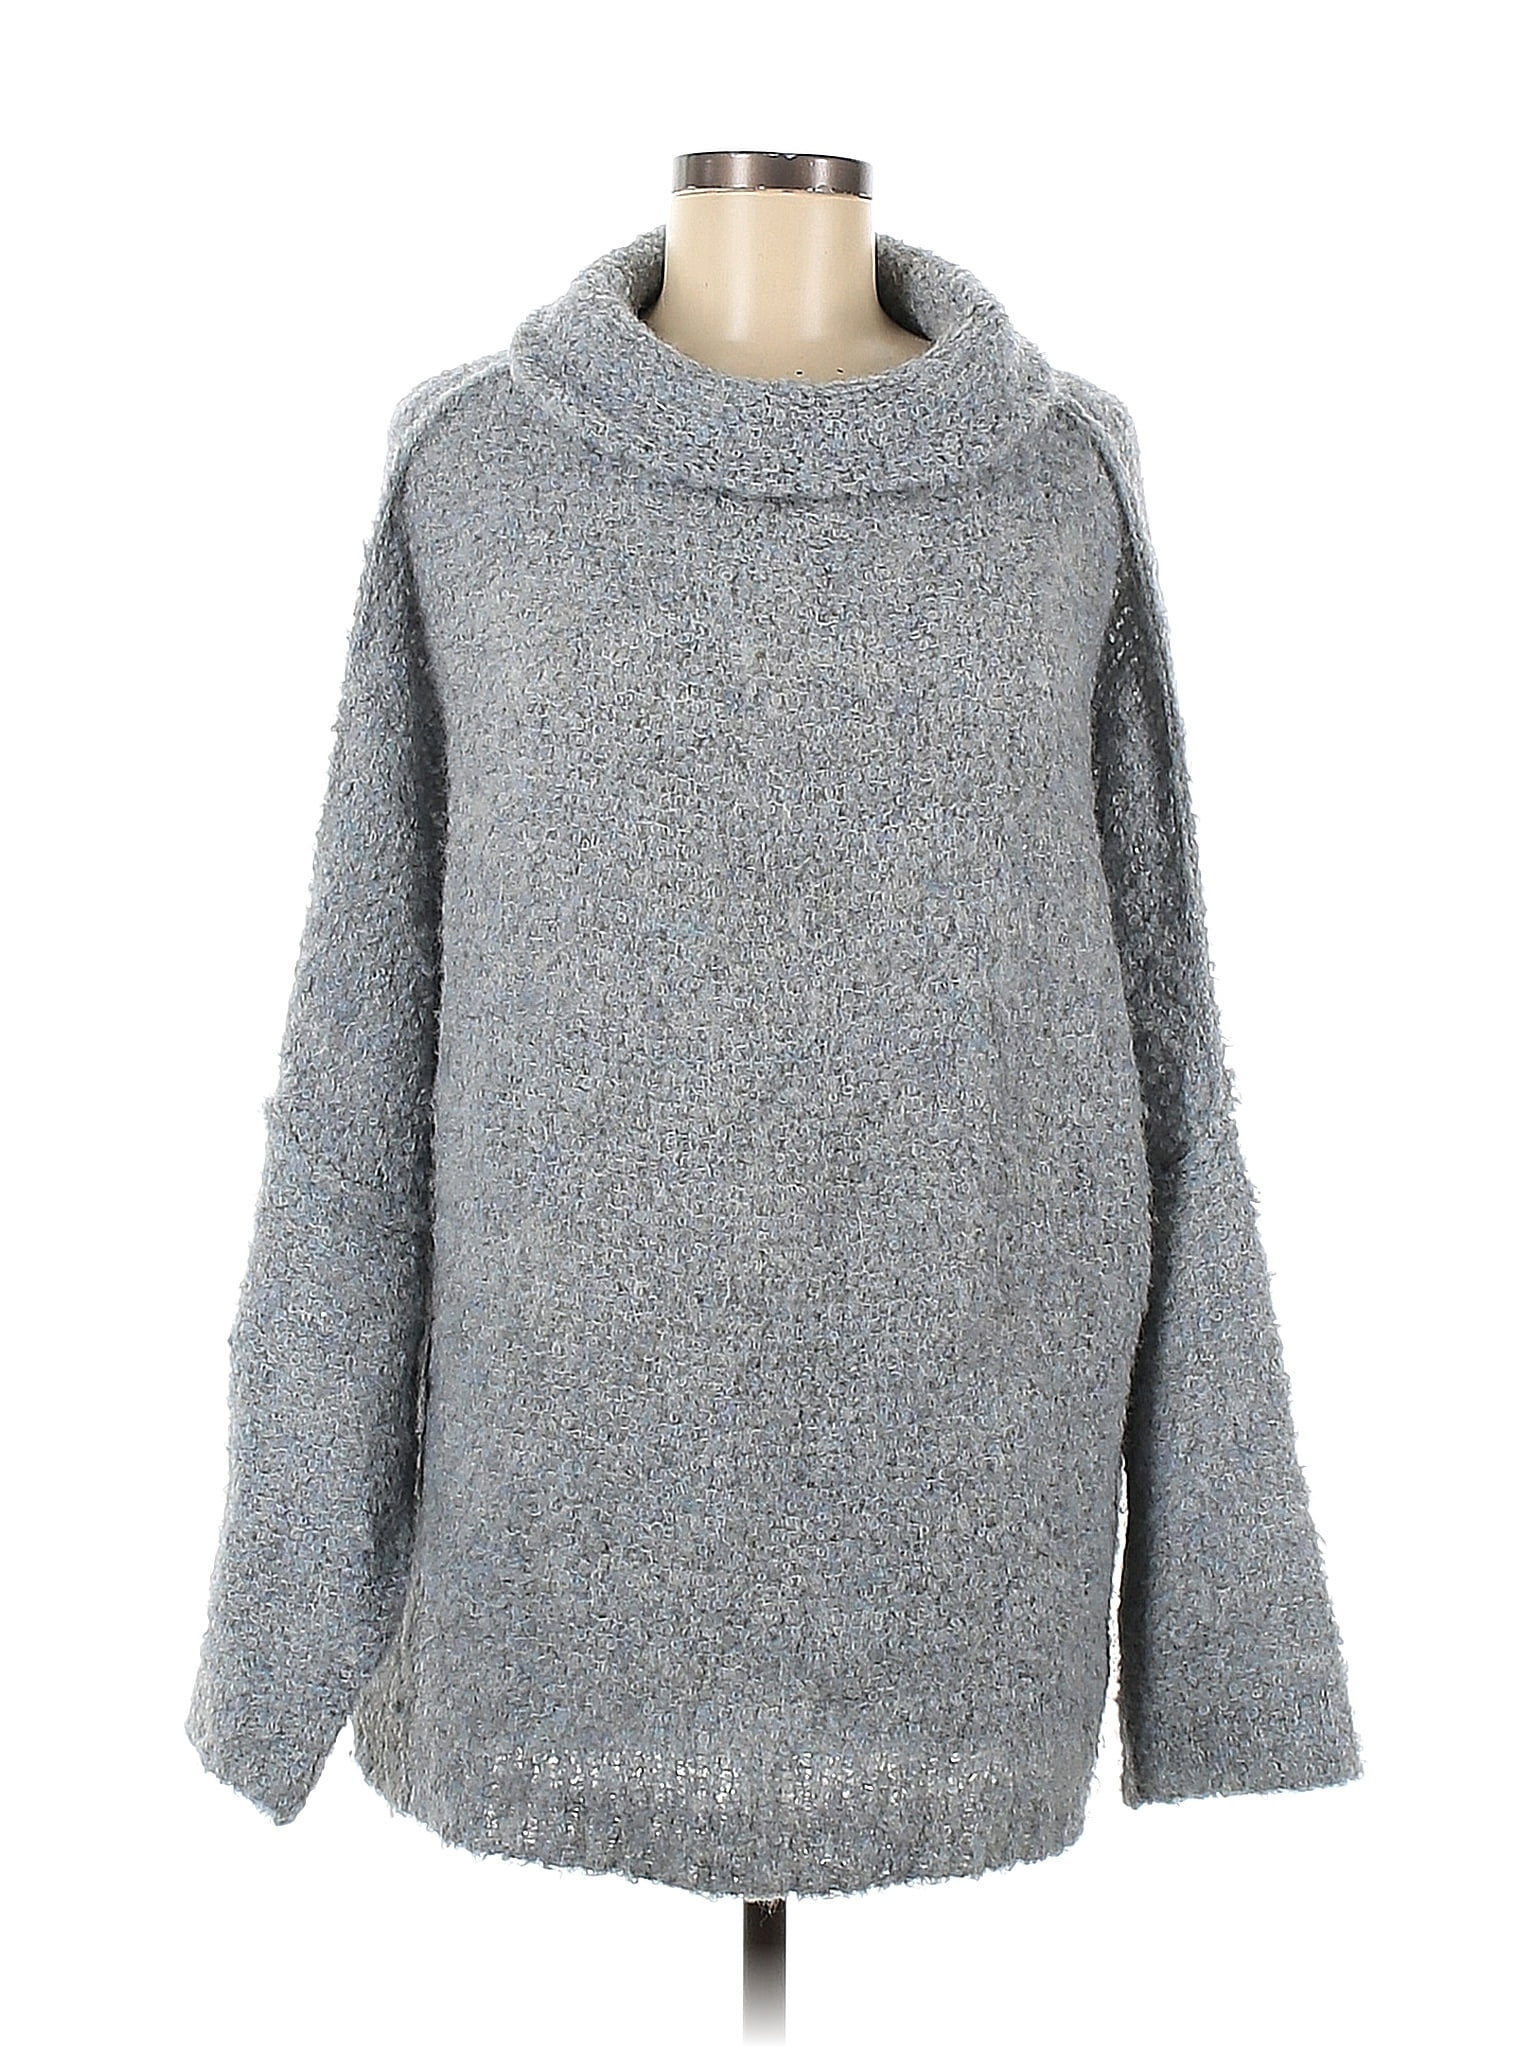 Free People Gray Turtleneck Sweater Size M - 62% off | thredUP